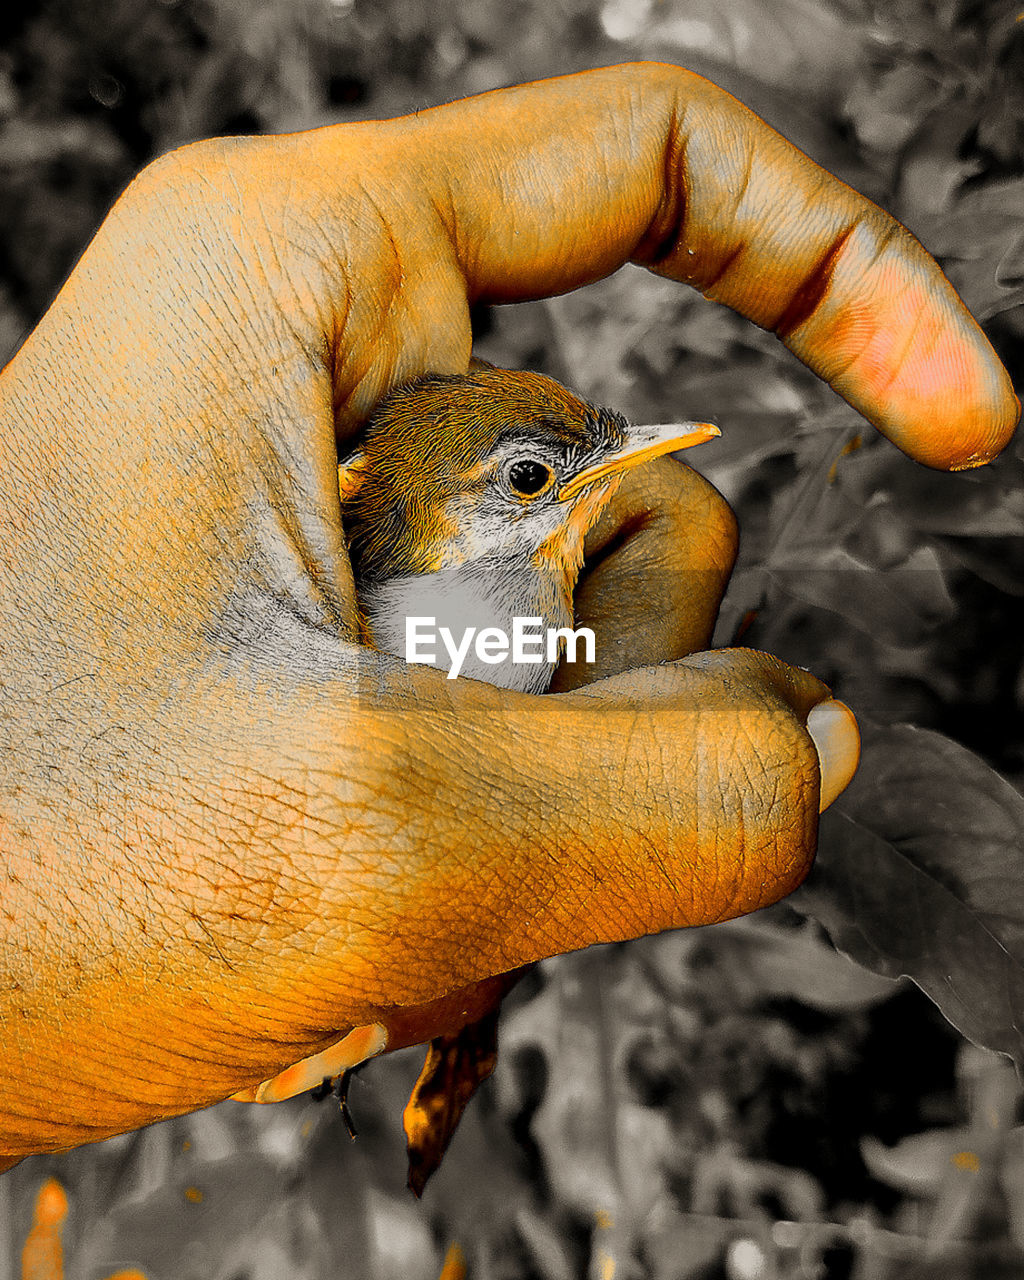 CLOSE-UP OF HAND HOLDING BIRD